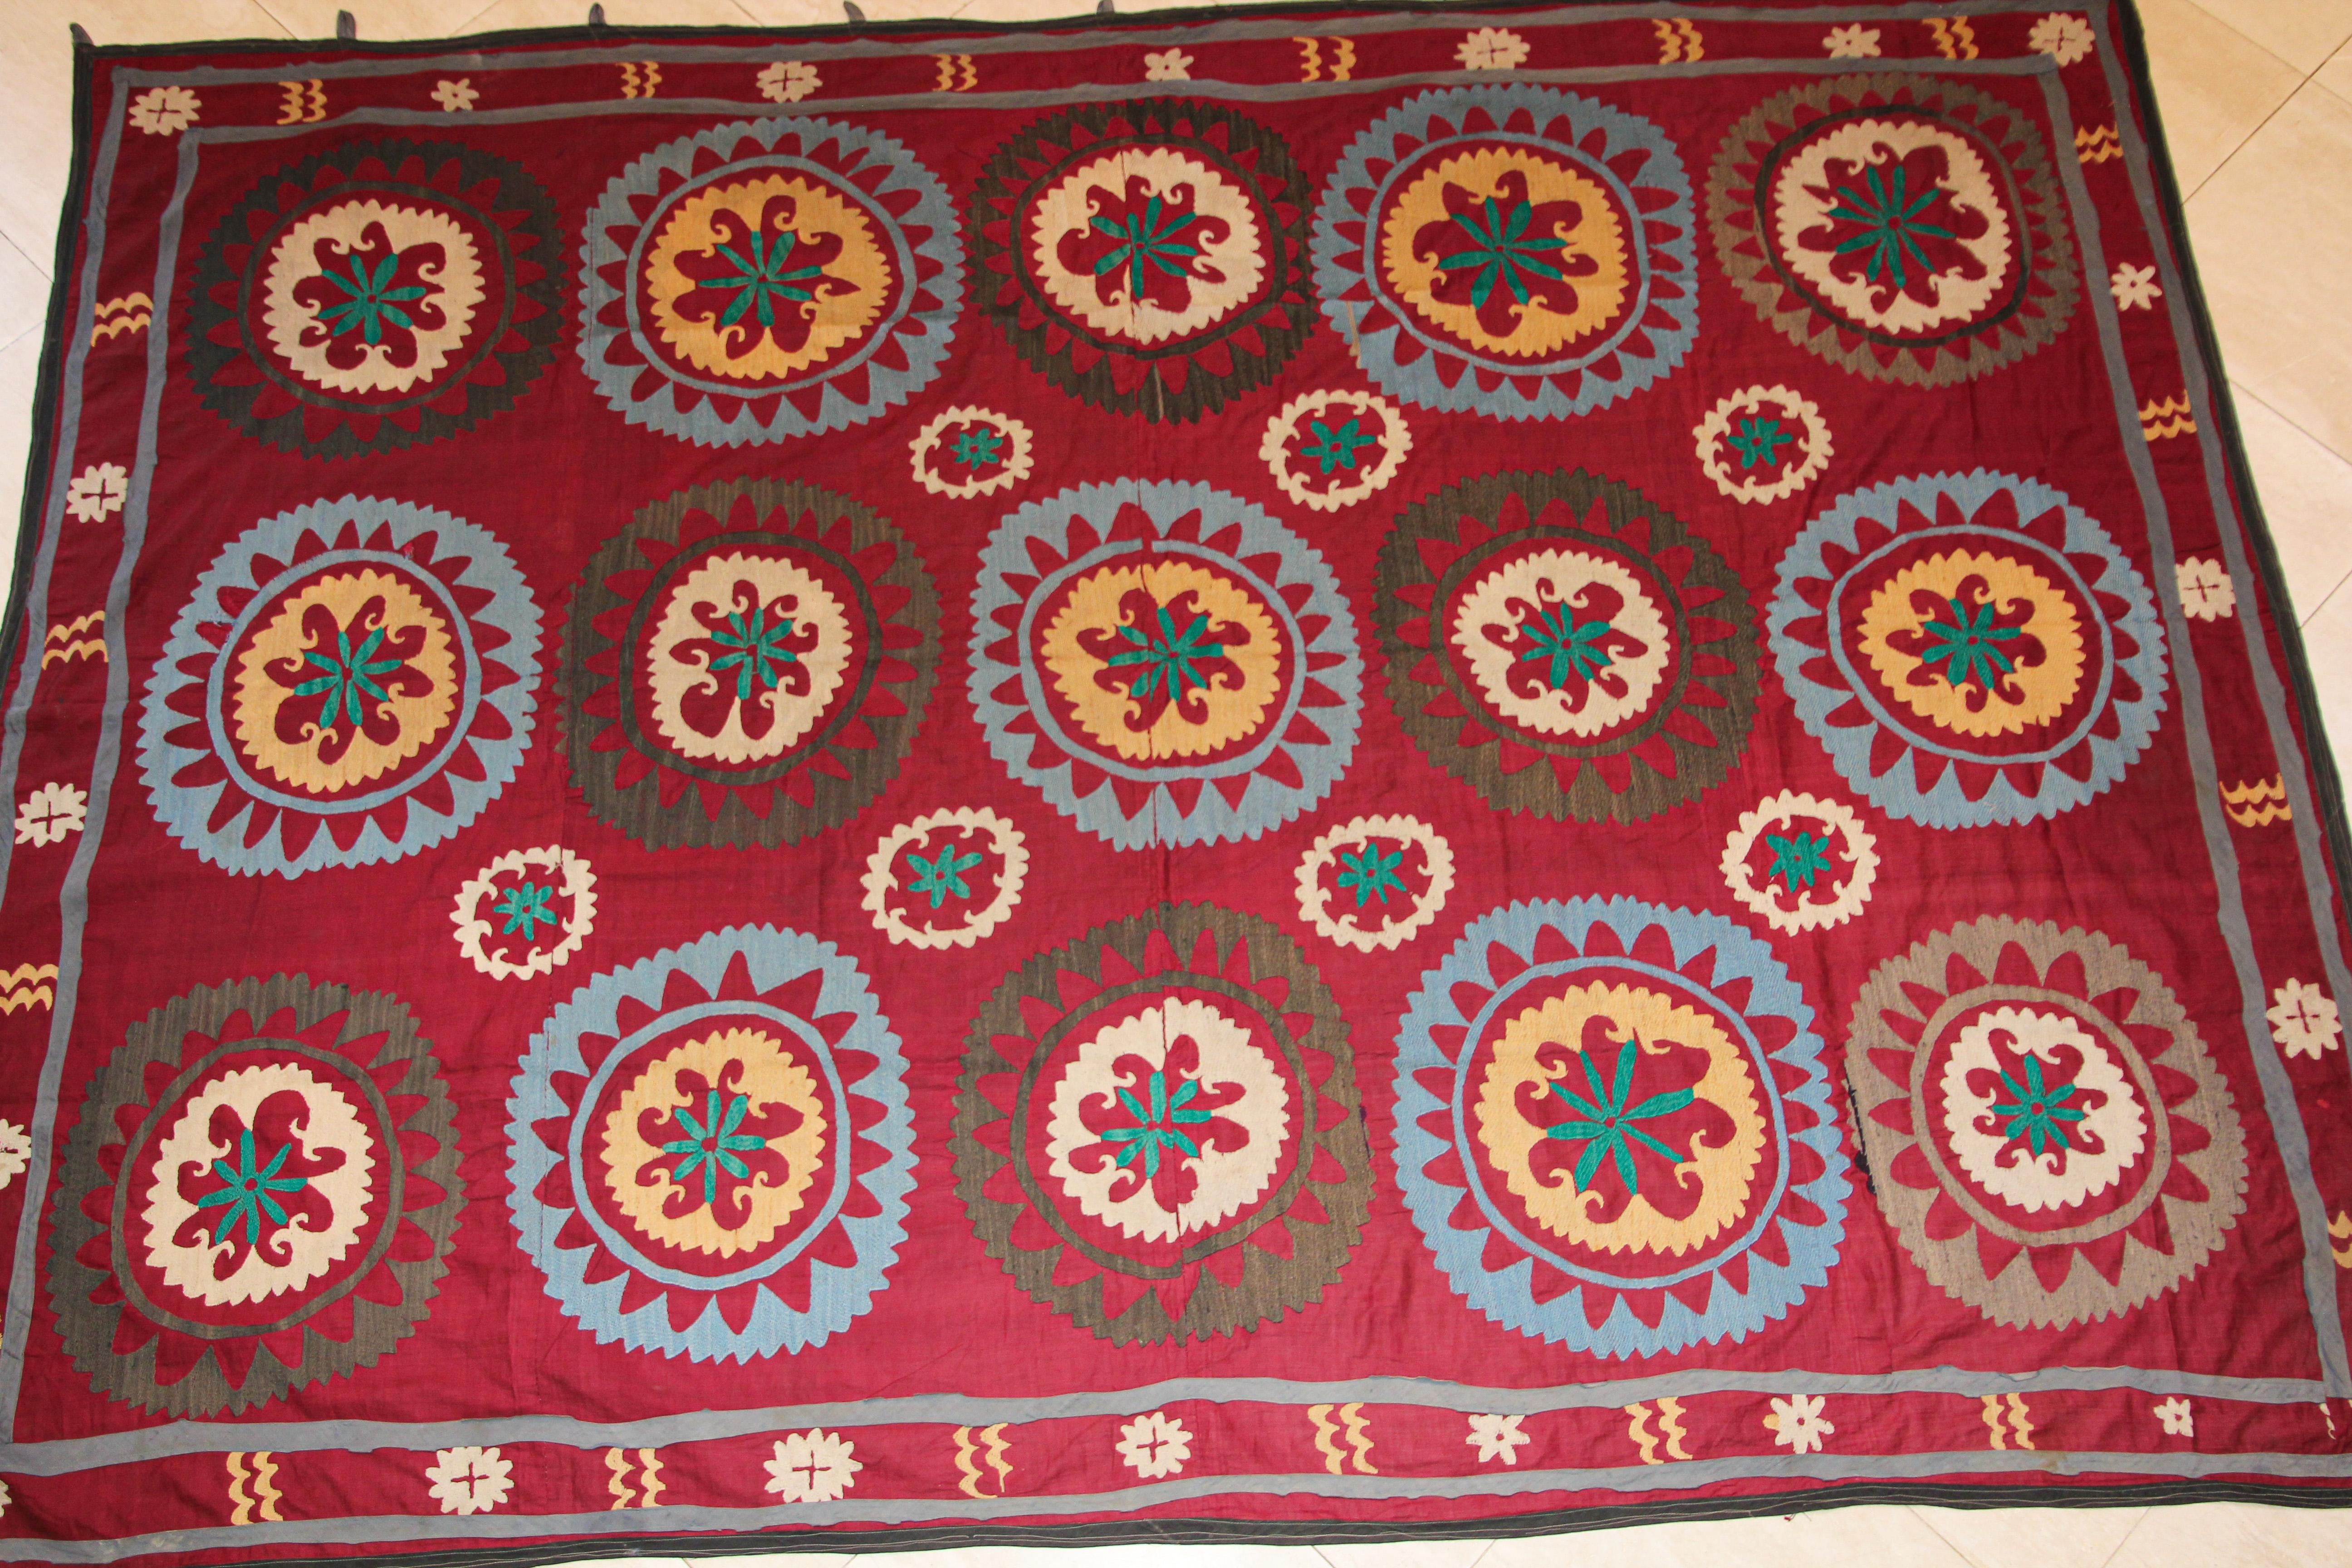 Vintage Uzbek Suzani Needlework Textile Blanket or Tapestry 6